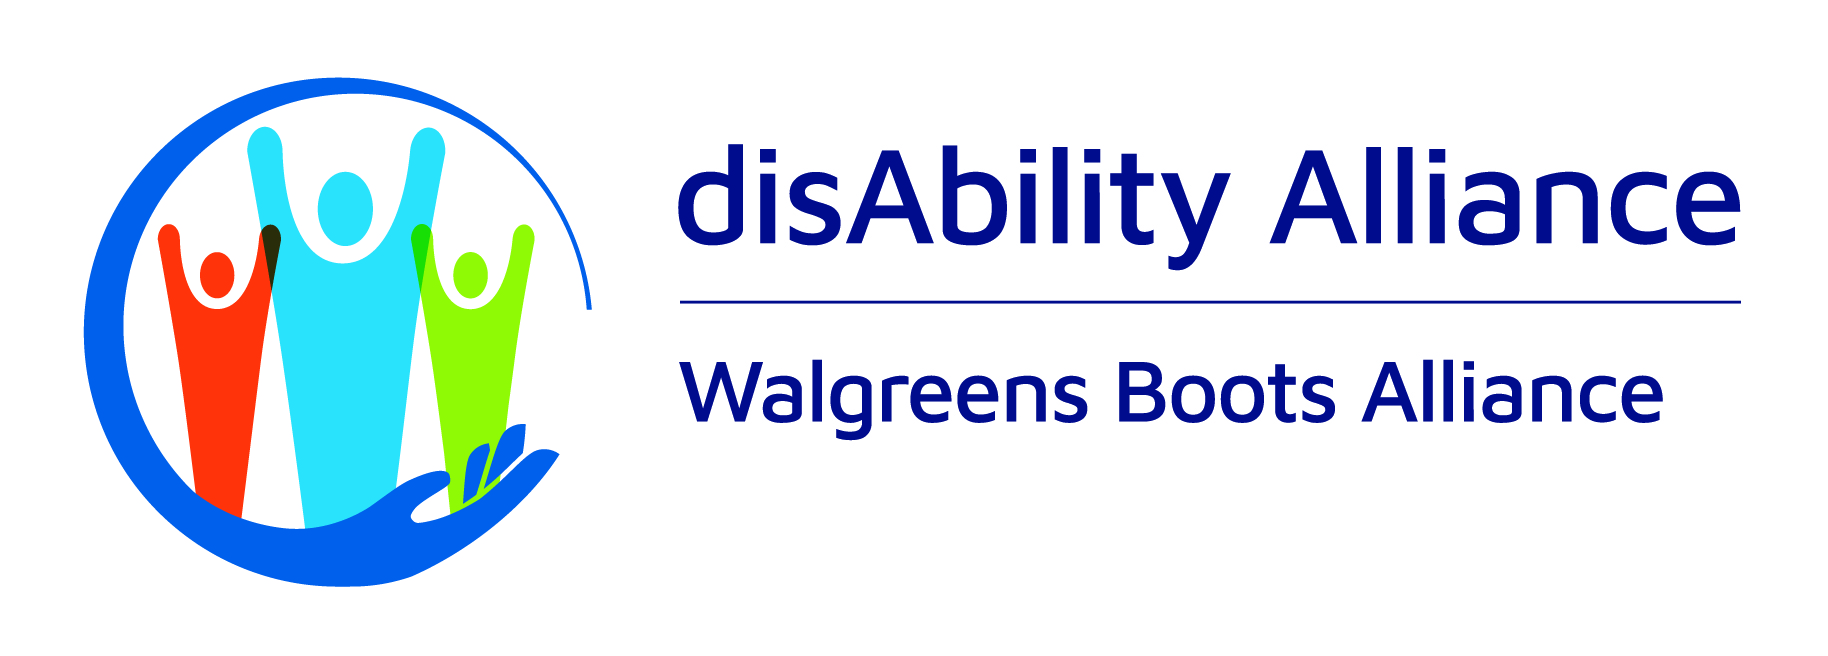 disAbility Alliance BRG logo